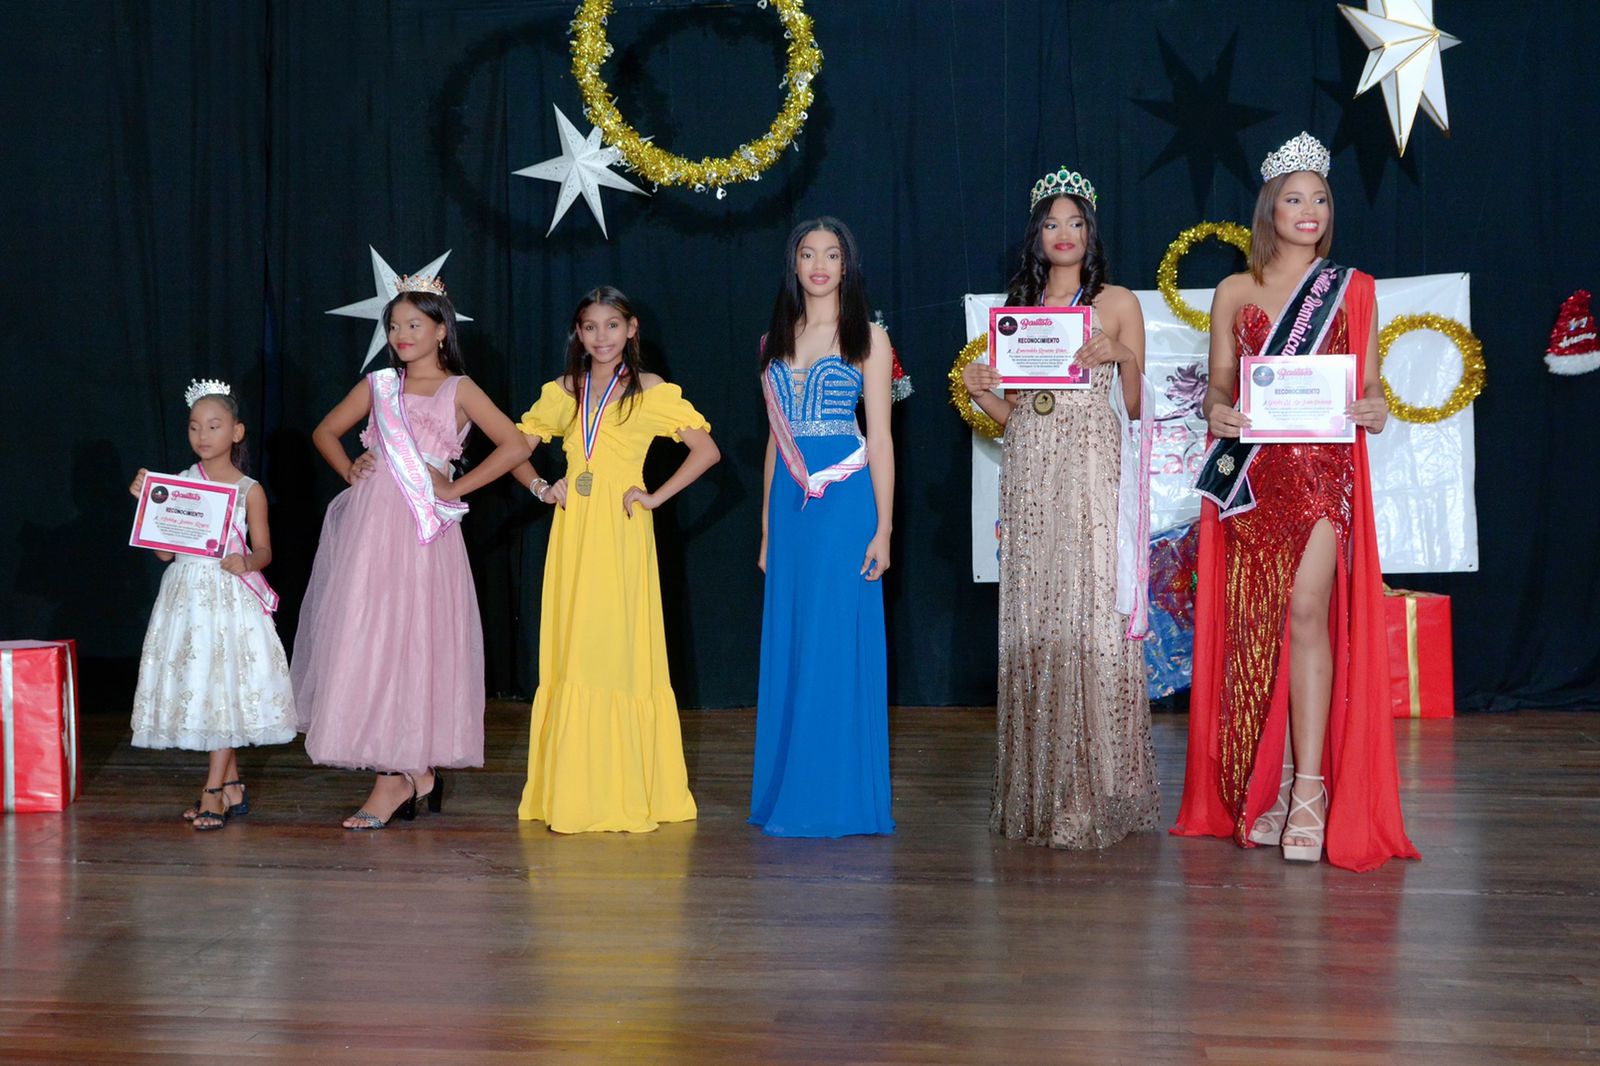 Agencia de modelaje Bautista Modeling Academy realiza certamen de belleza "Christmas Fashion Show 2022"